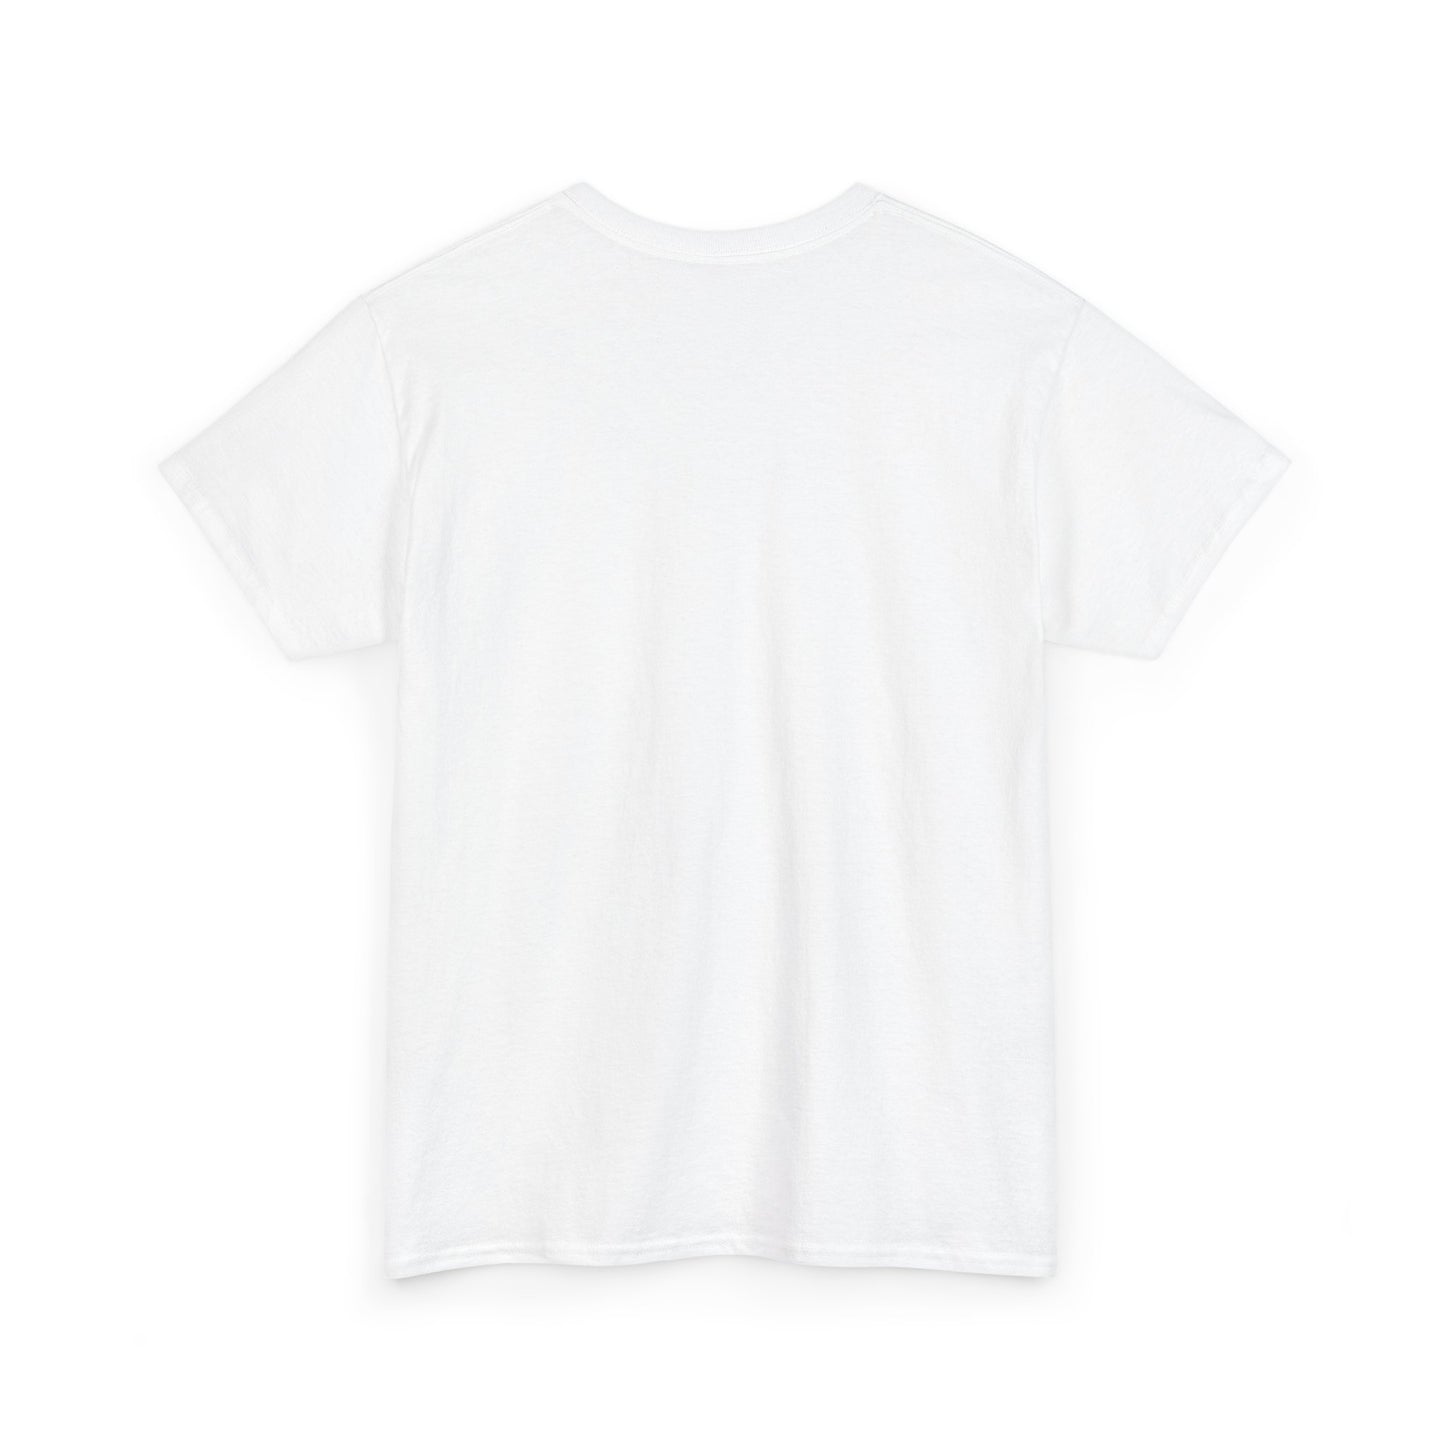 "Kochief" T-shirt